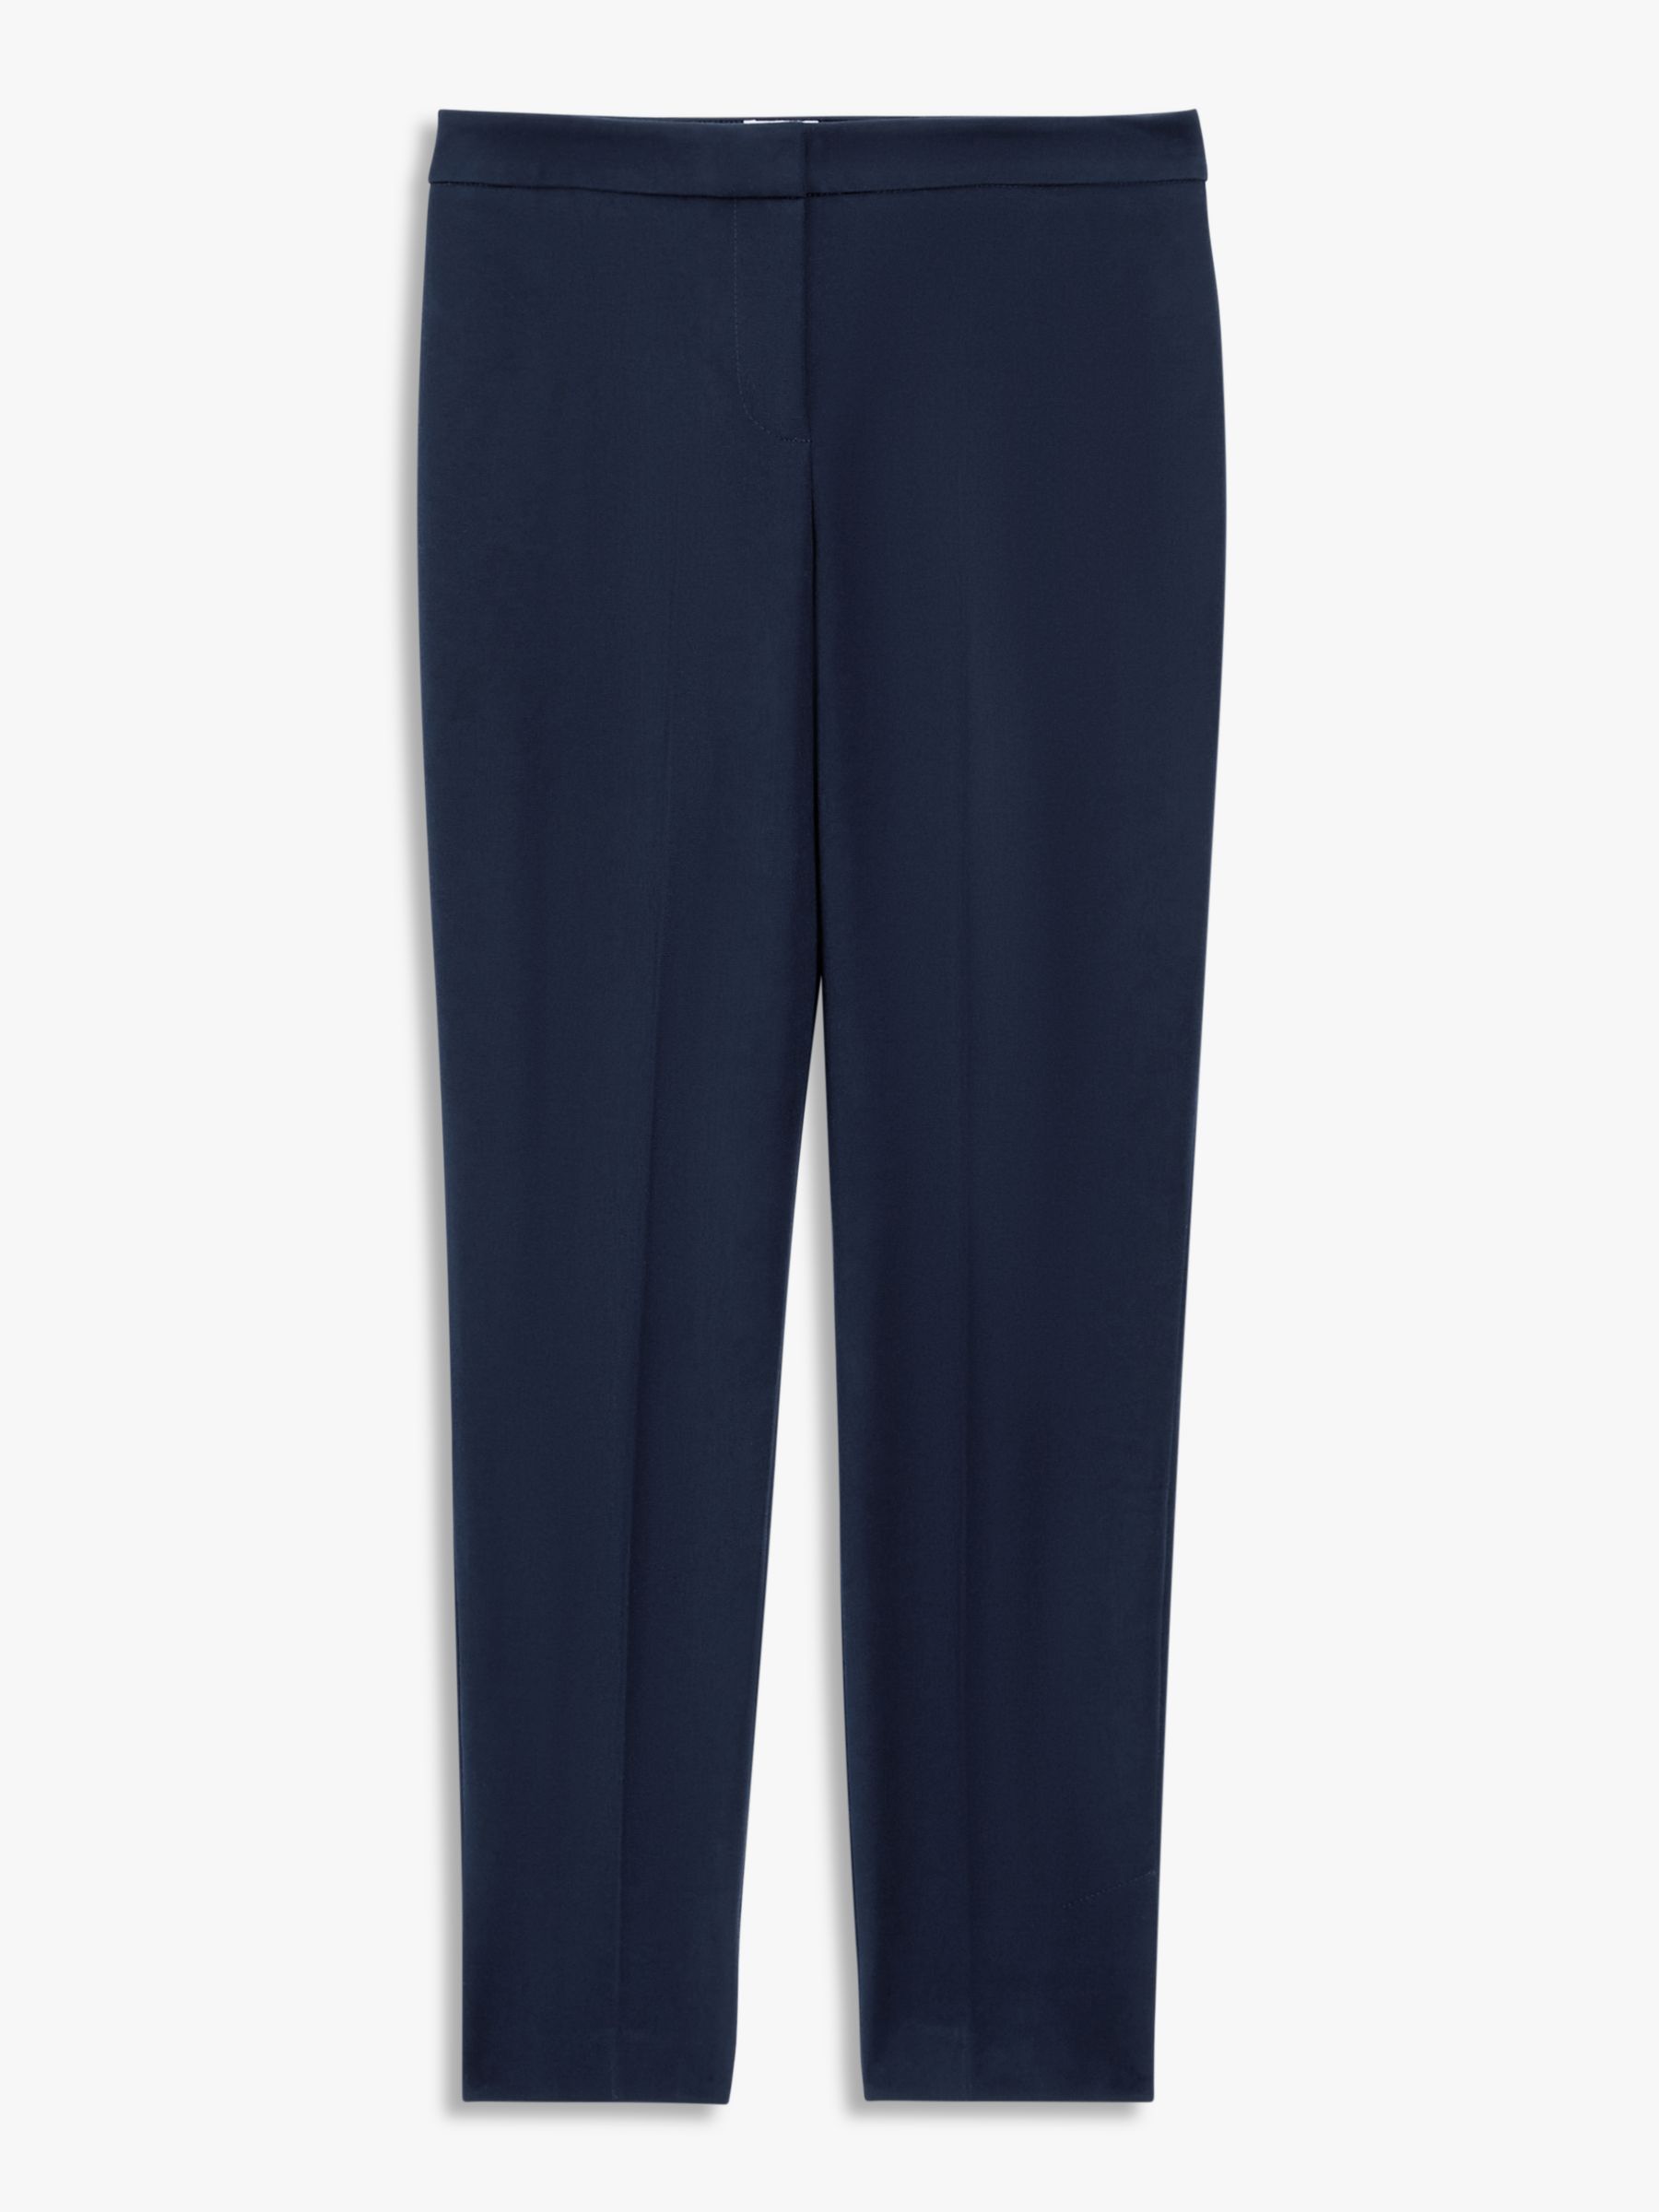 Buy John Lewis Slim Bi-Stretch Trousers, Navy Online at johnlewis.com